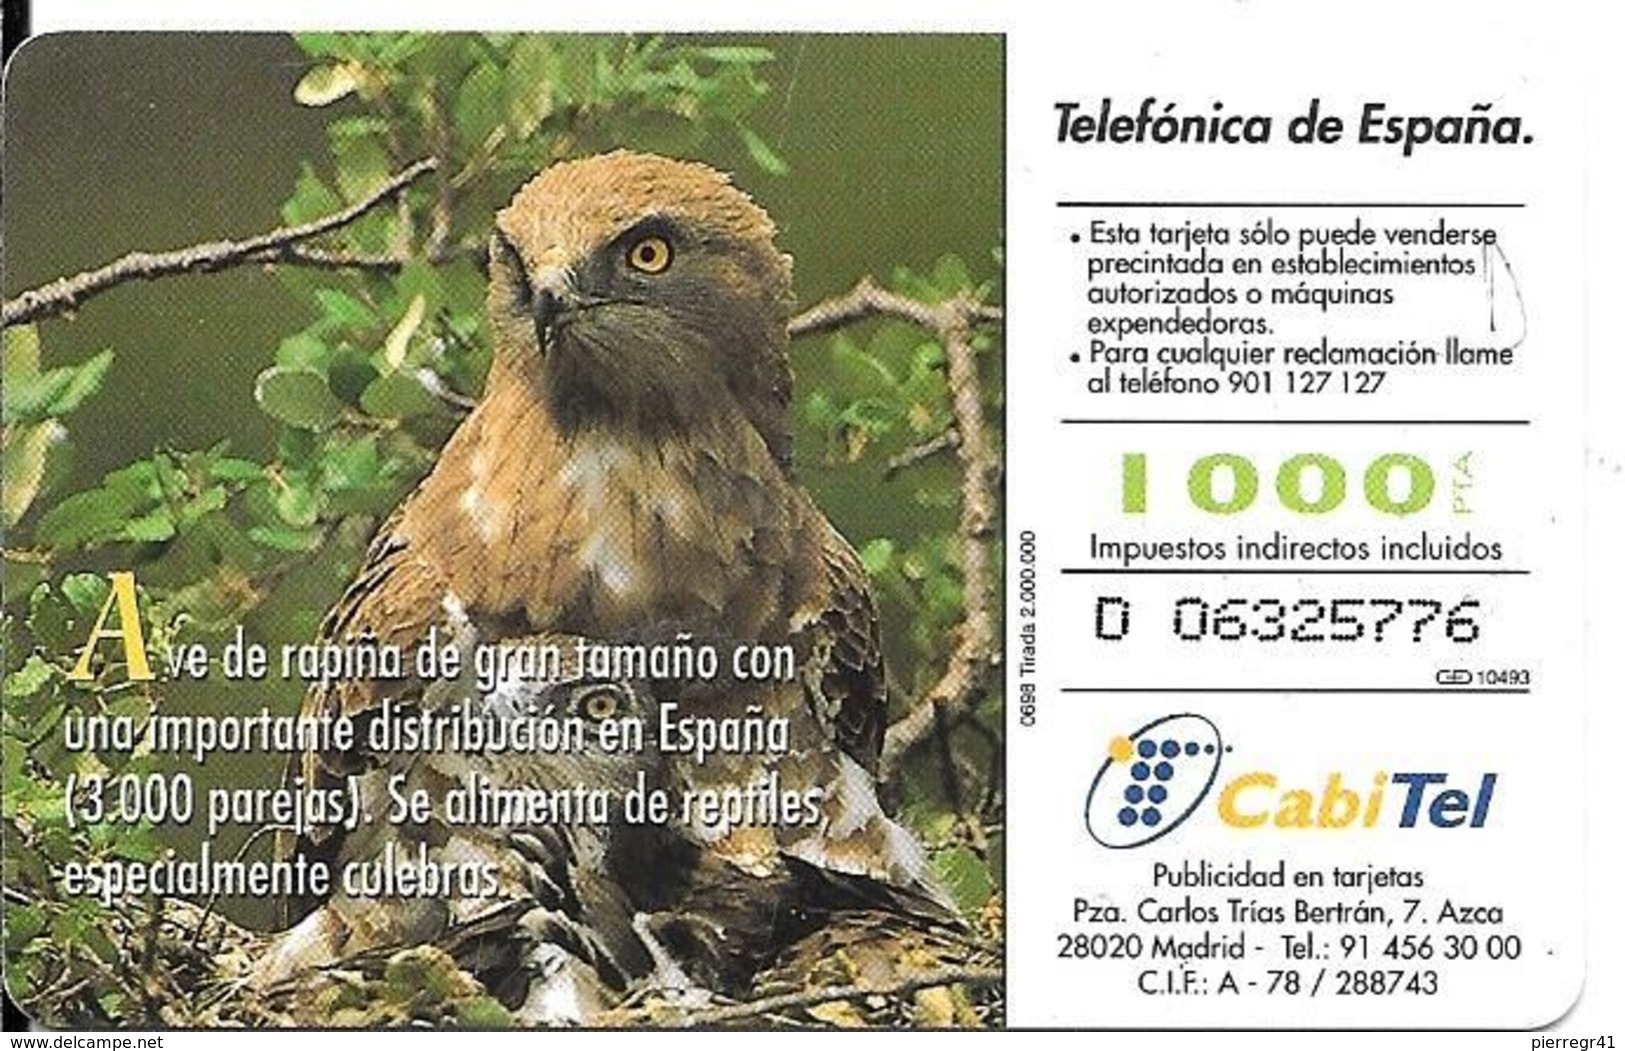 CARTE-PUCE-ESPAGNE-AIGLE-AGUILA CULEBREBA-TBE- - Águilas & Aves De Presa